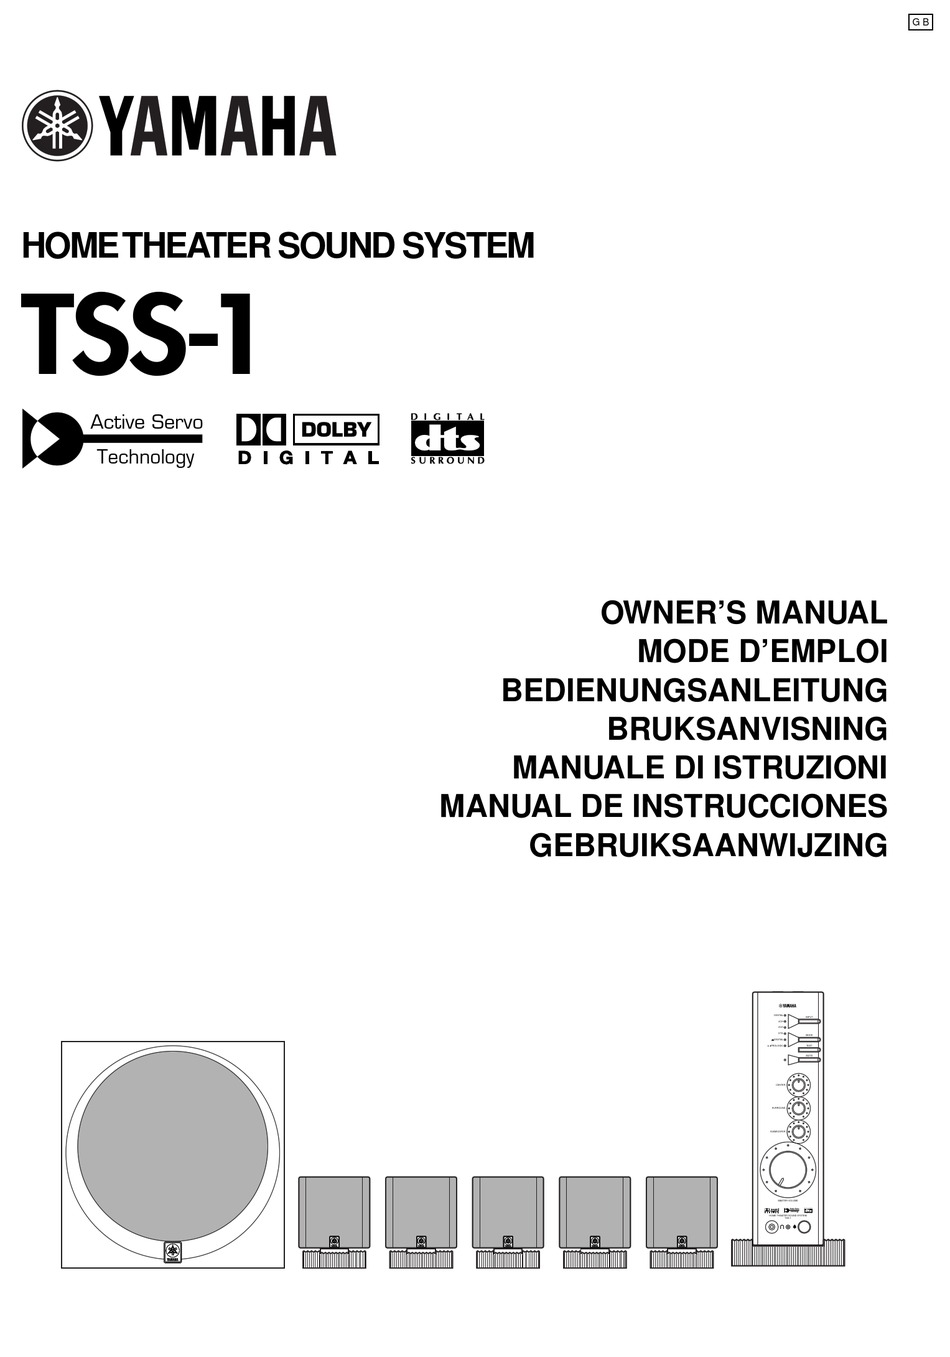 23+ Yamaha home theater sound system tss 1 ideas